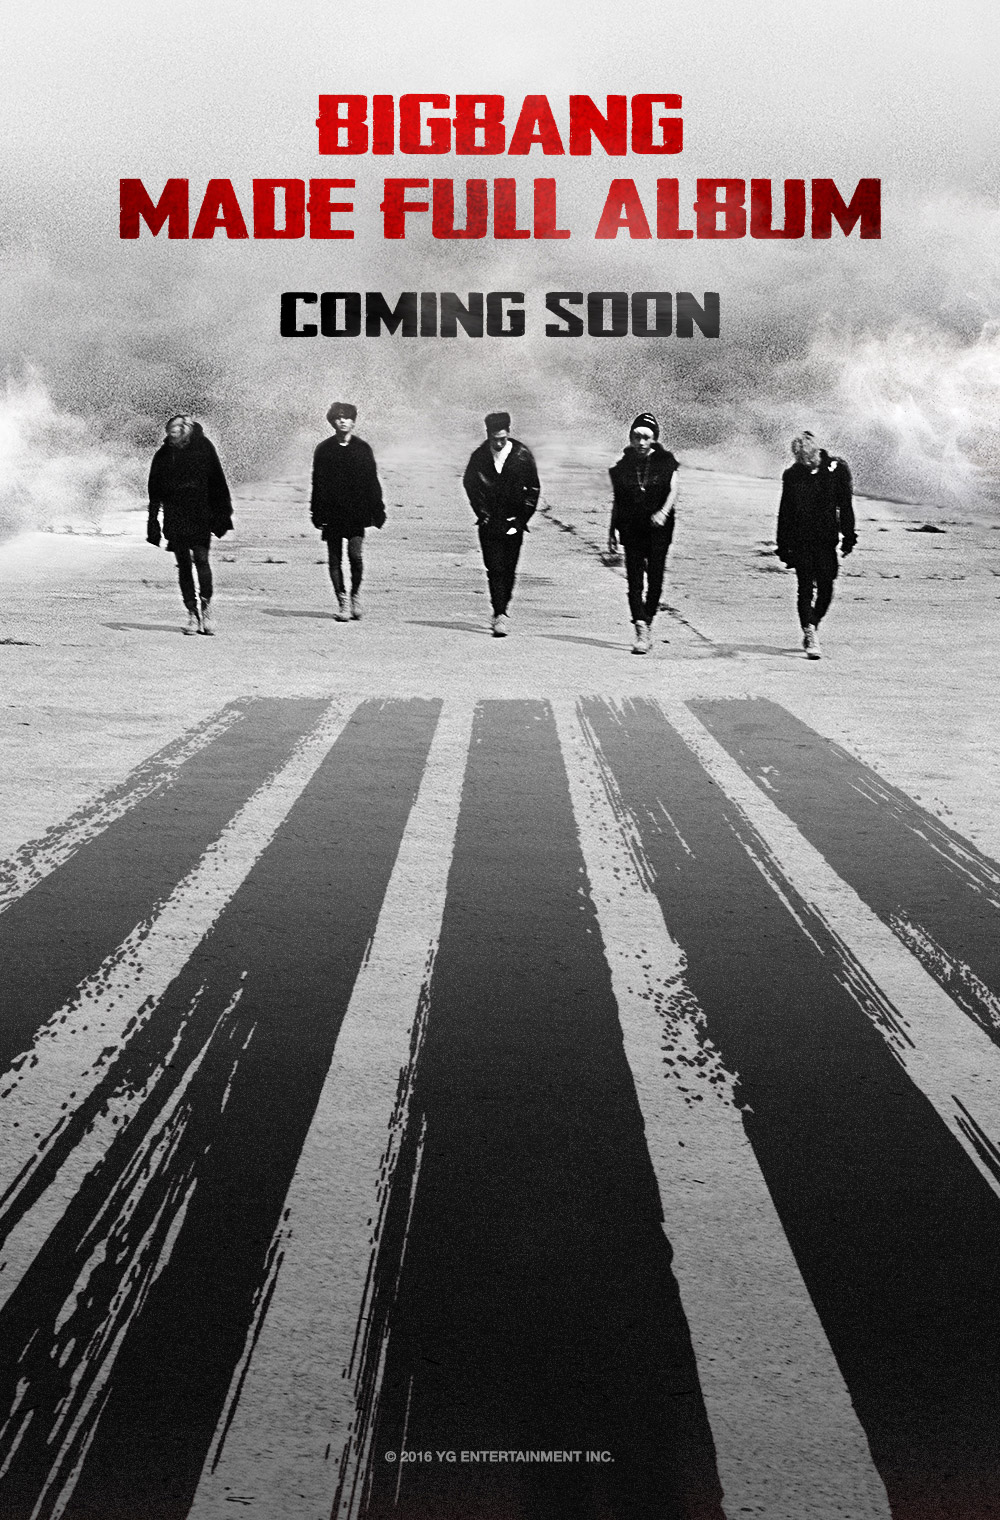 BIGBANG MADE FULL ALBUM